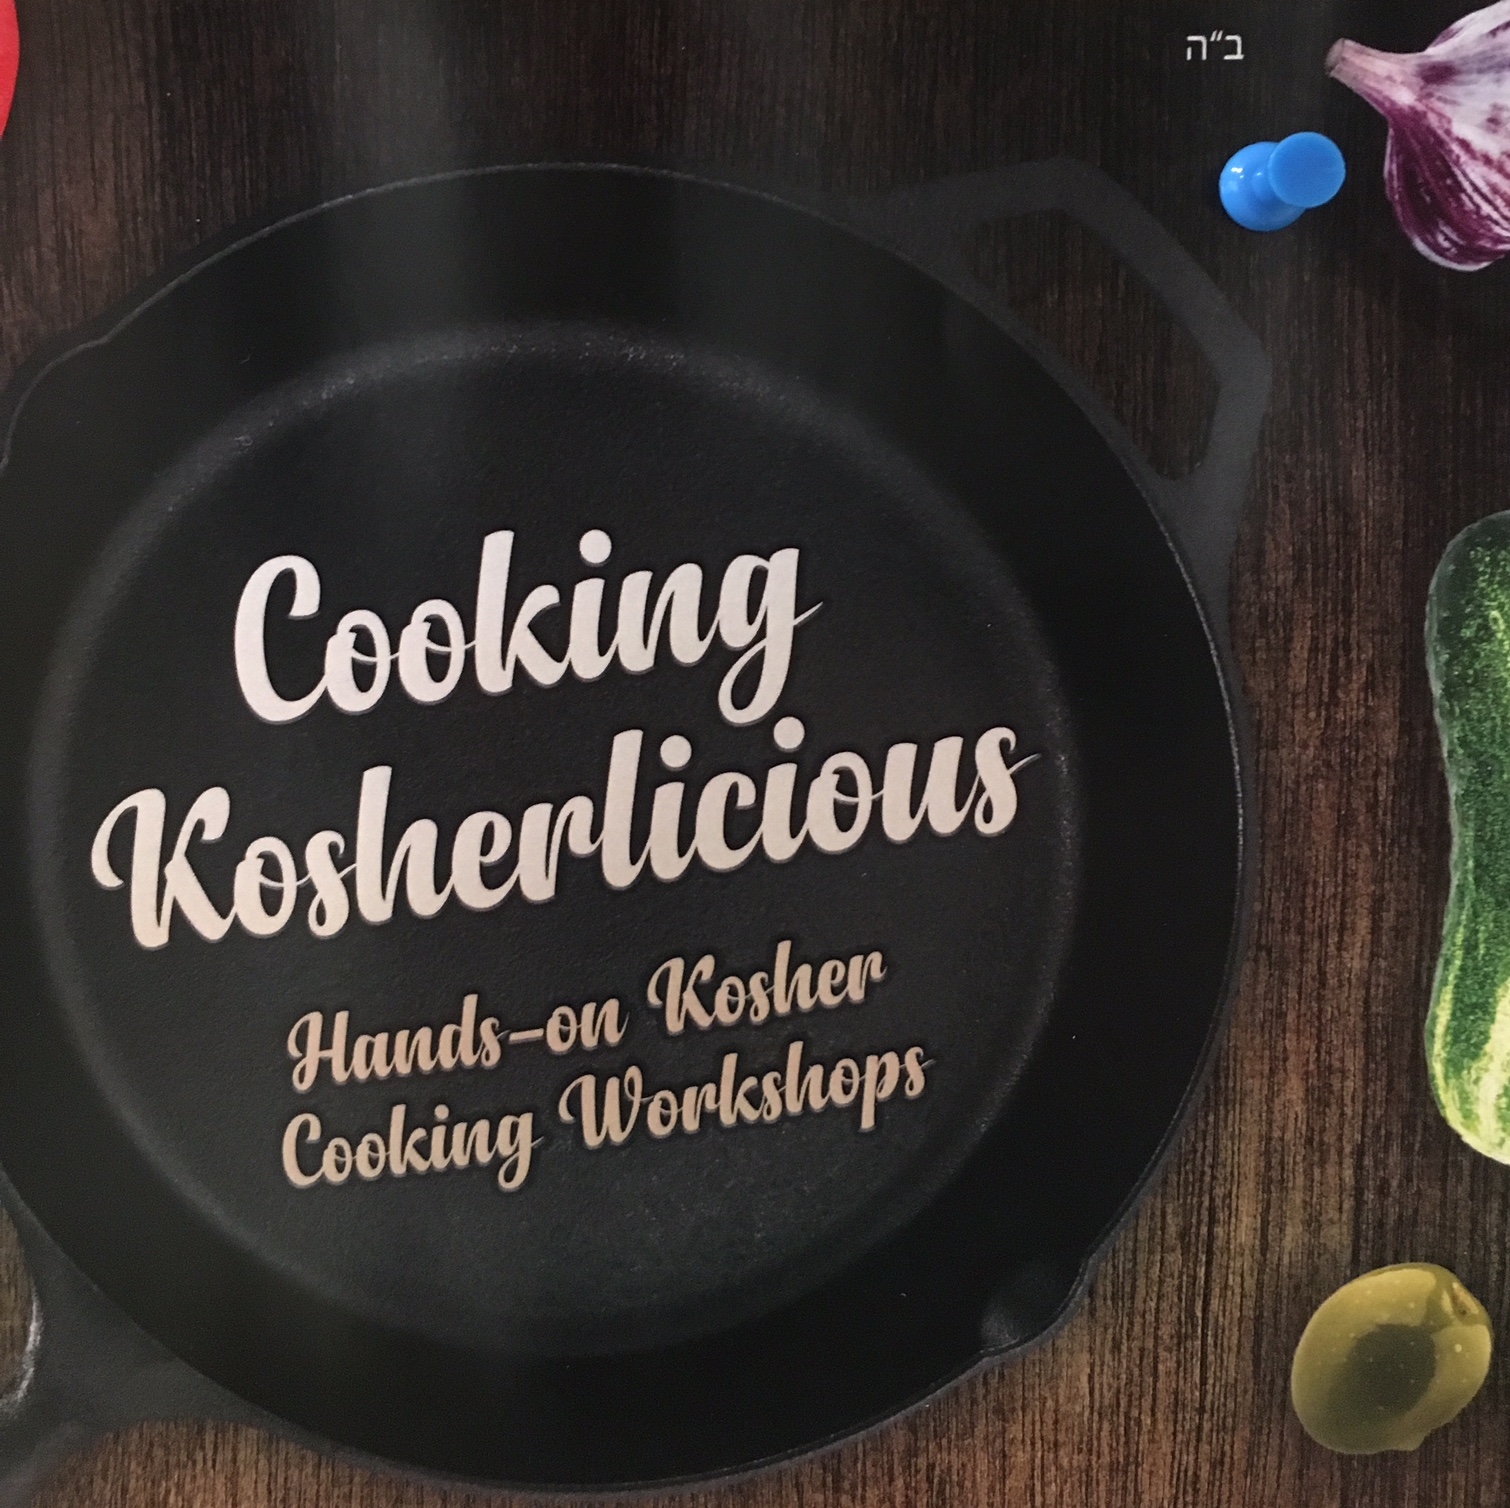 Kosherlicious Cooking: Hummus and Babganoush!